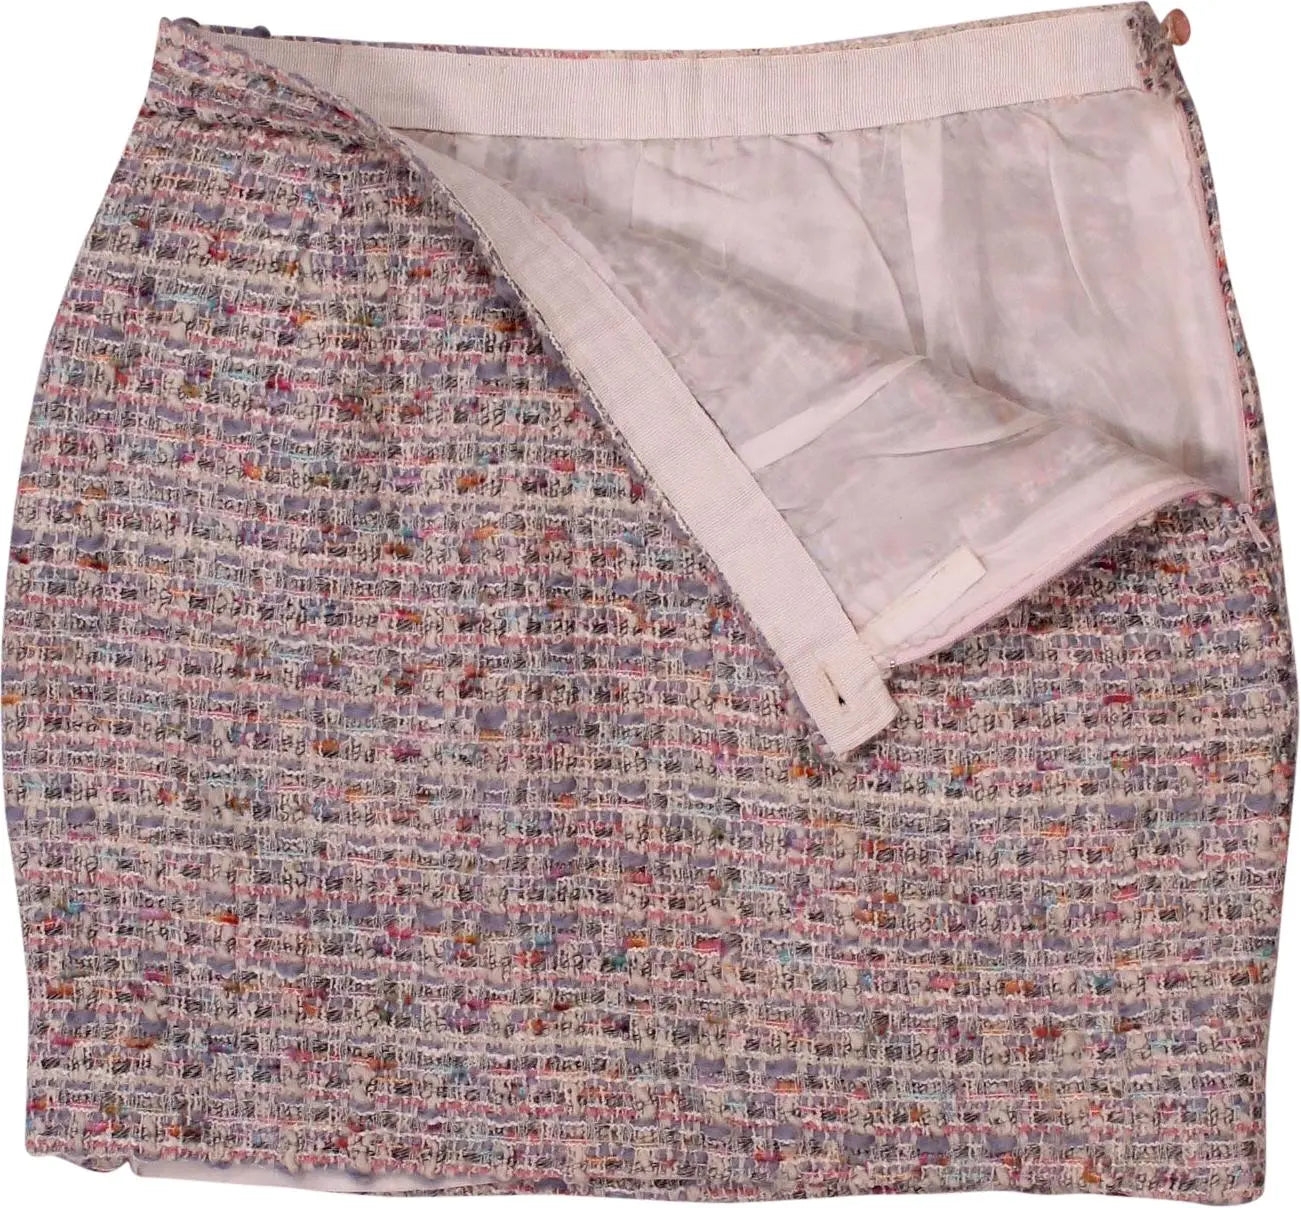 Handmade - Handmade Tweed Skirt- ThriftTale.com - Vintage and second handclothing